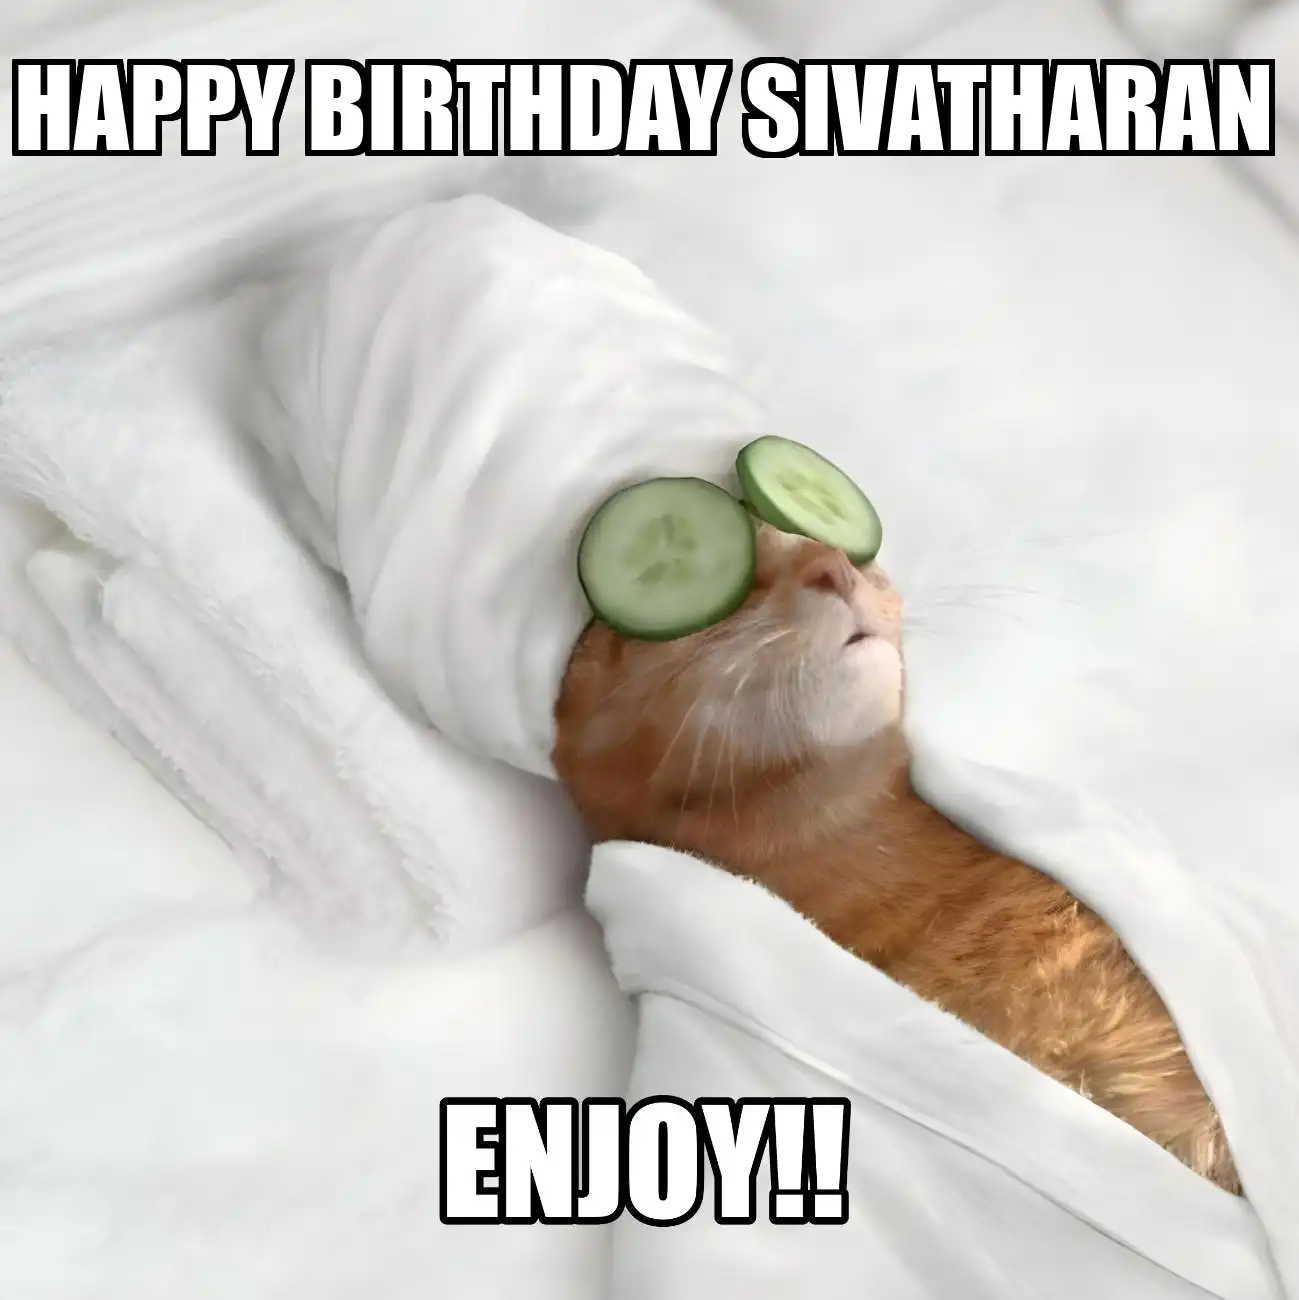 Happy Birthday Sivatharan Enjoy Cat Meme